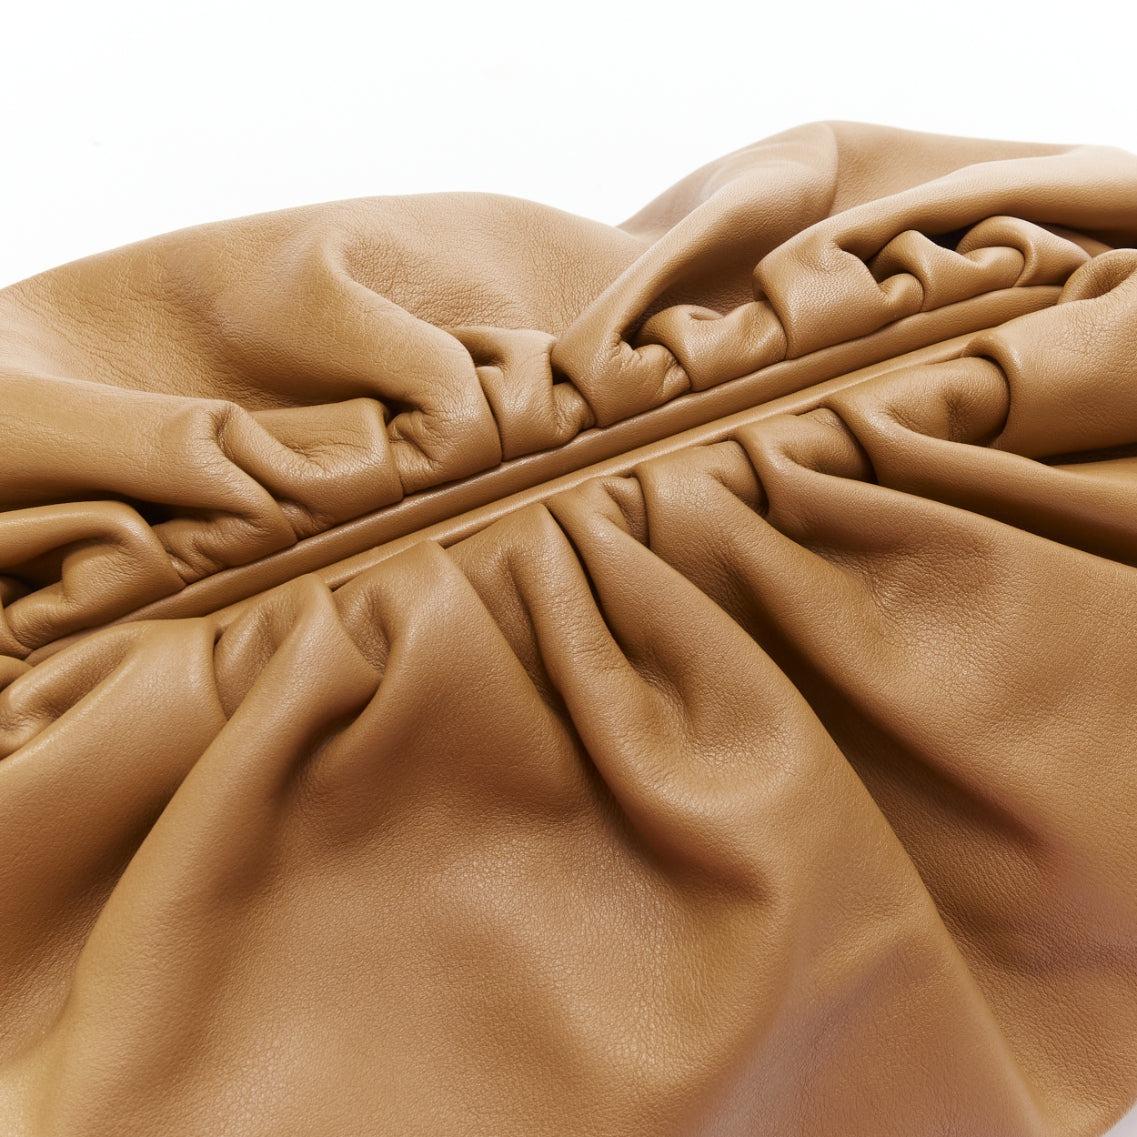 BOTTEGA VENETA The Pouch brown leather dumpling clutch bag For Sale 2